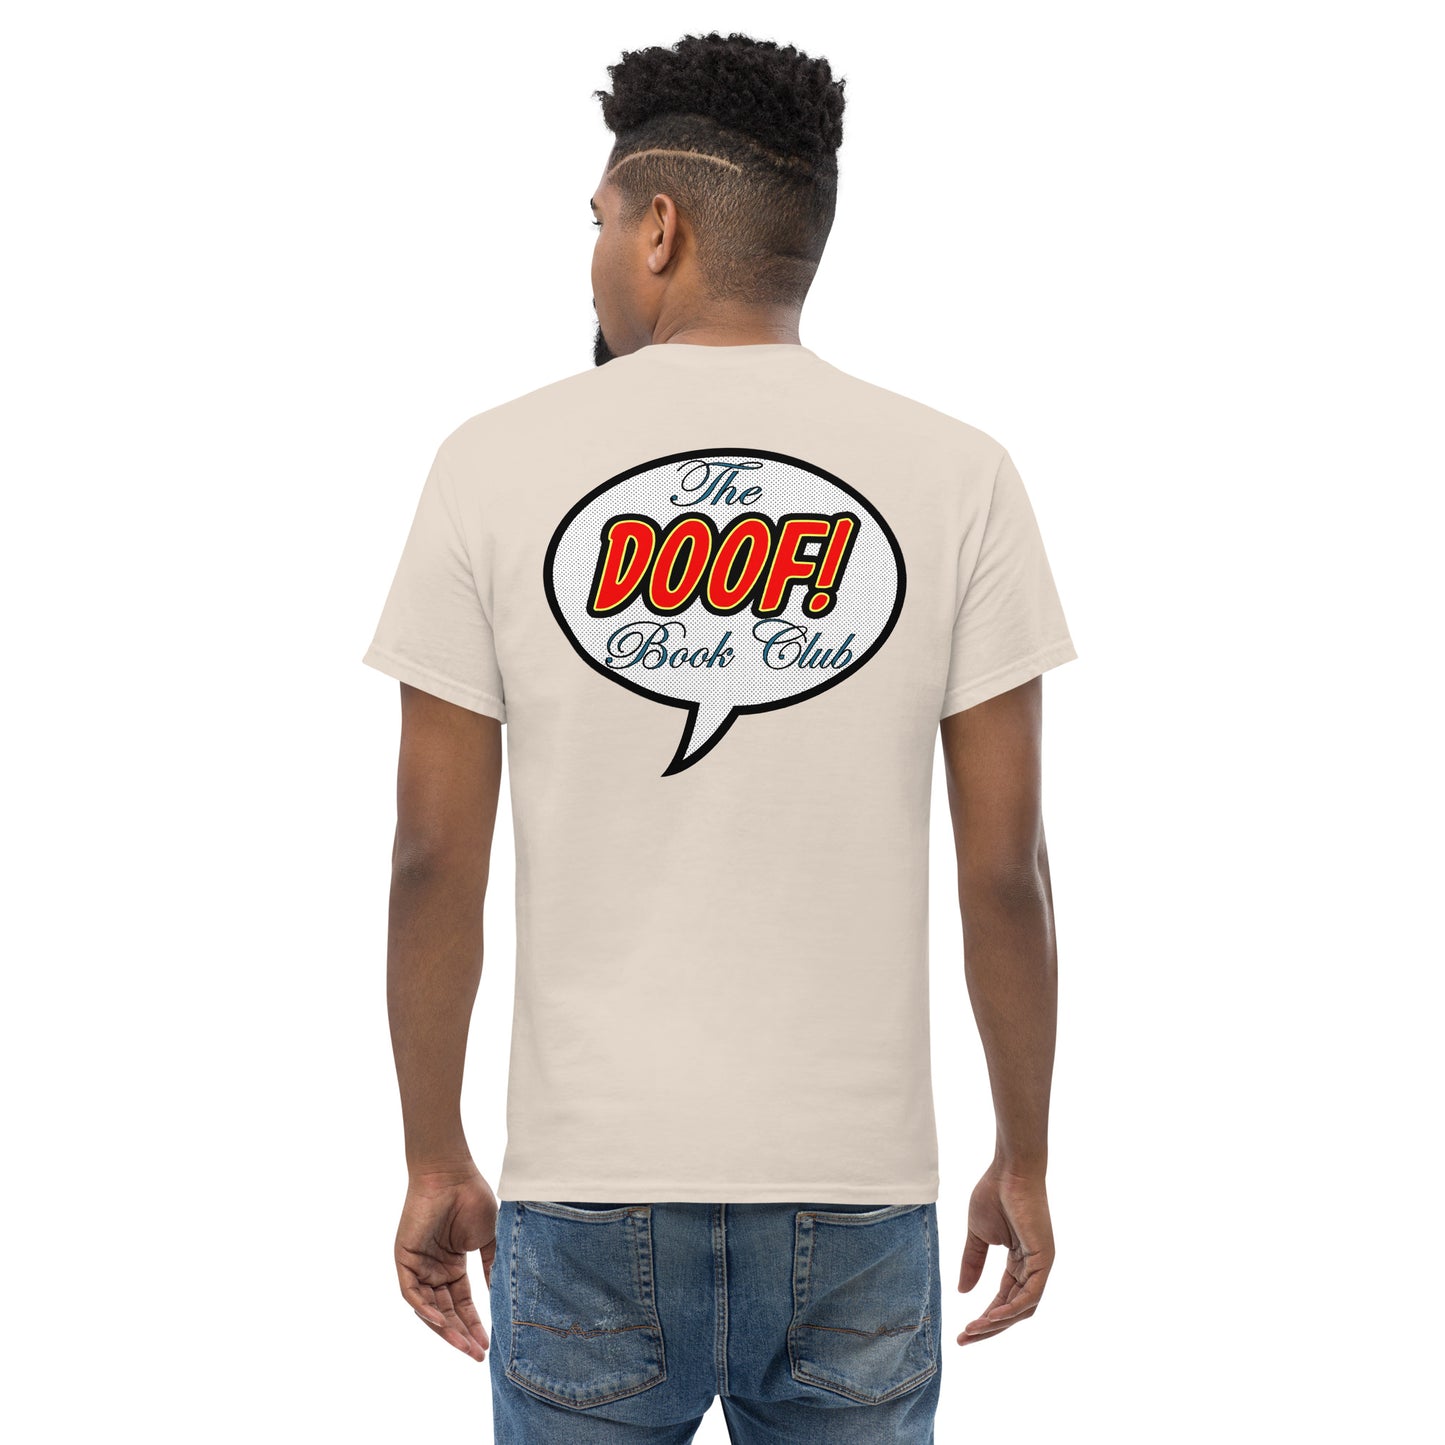 Doof! Book Club T-Shirt, Classic Fit